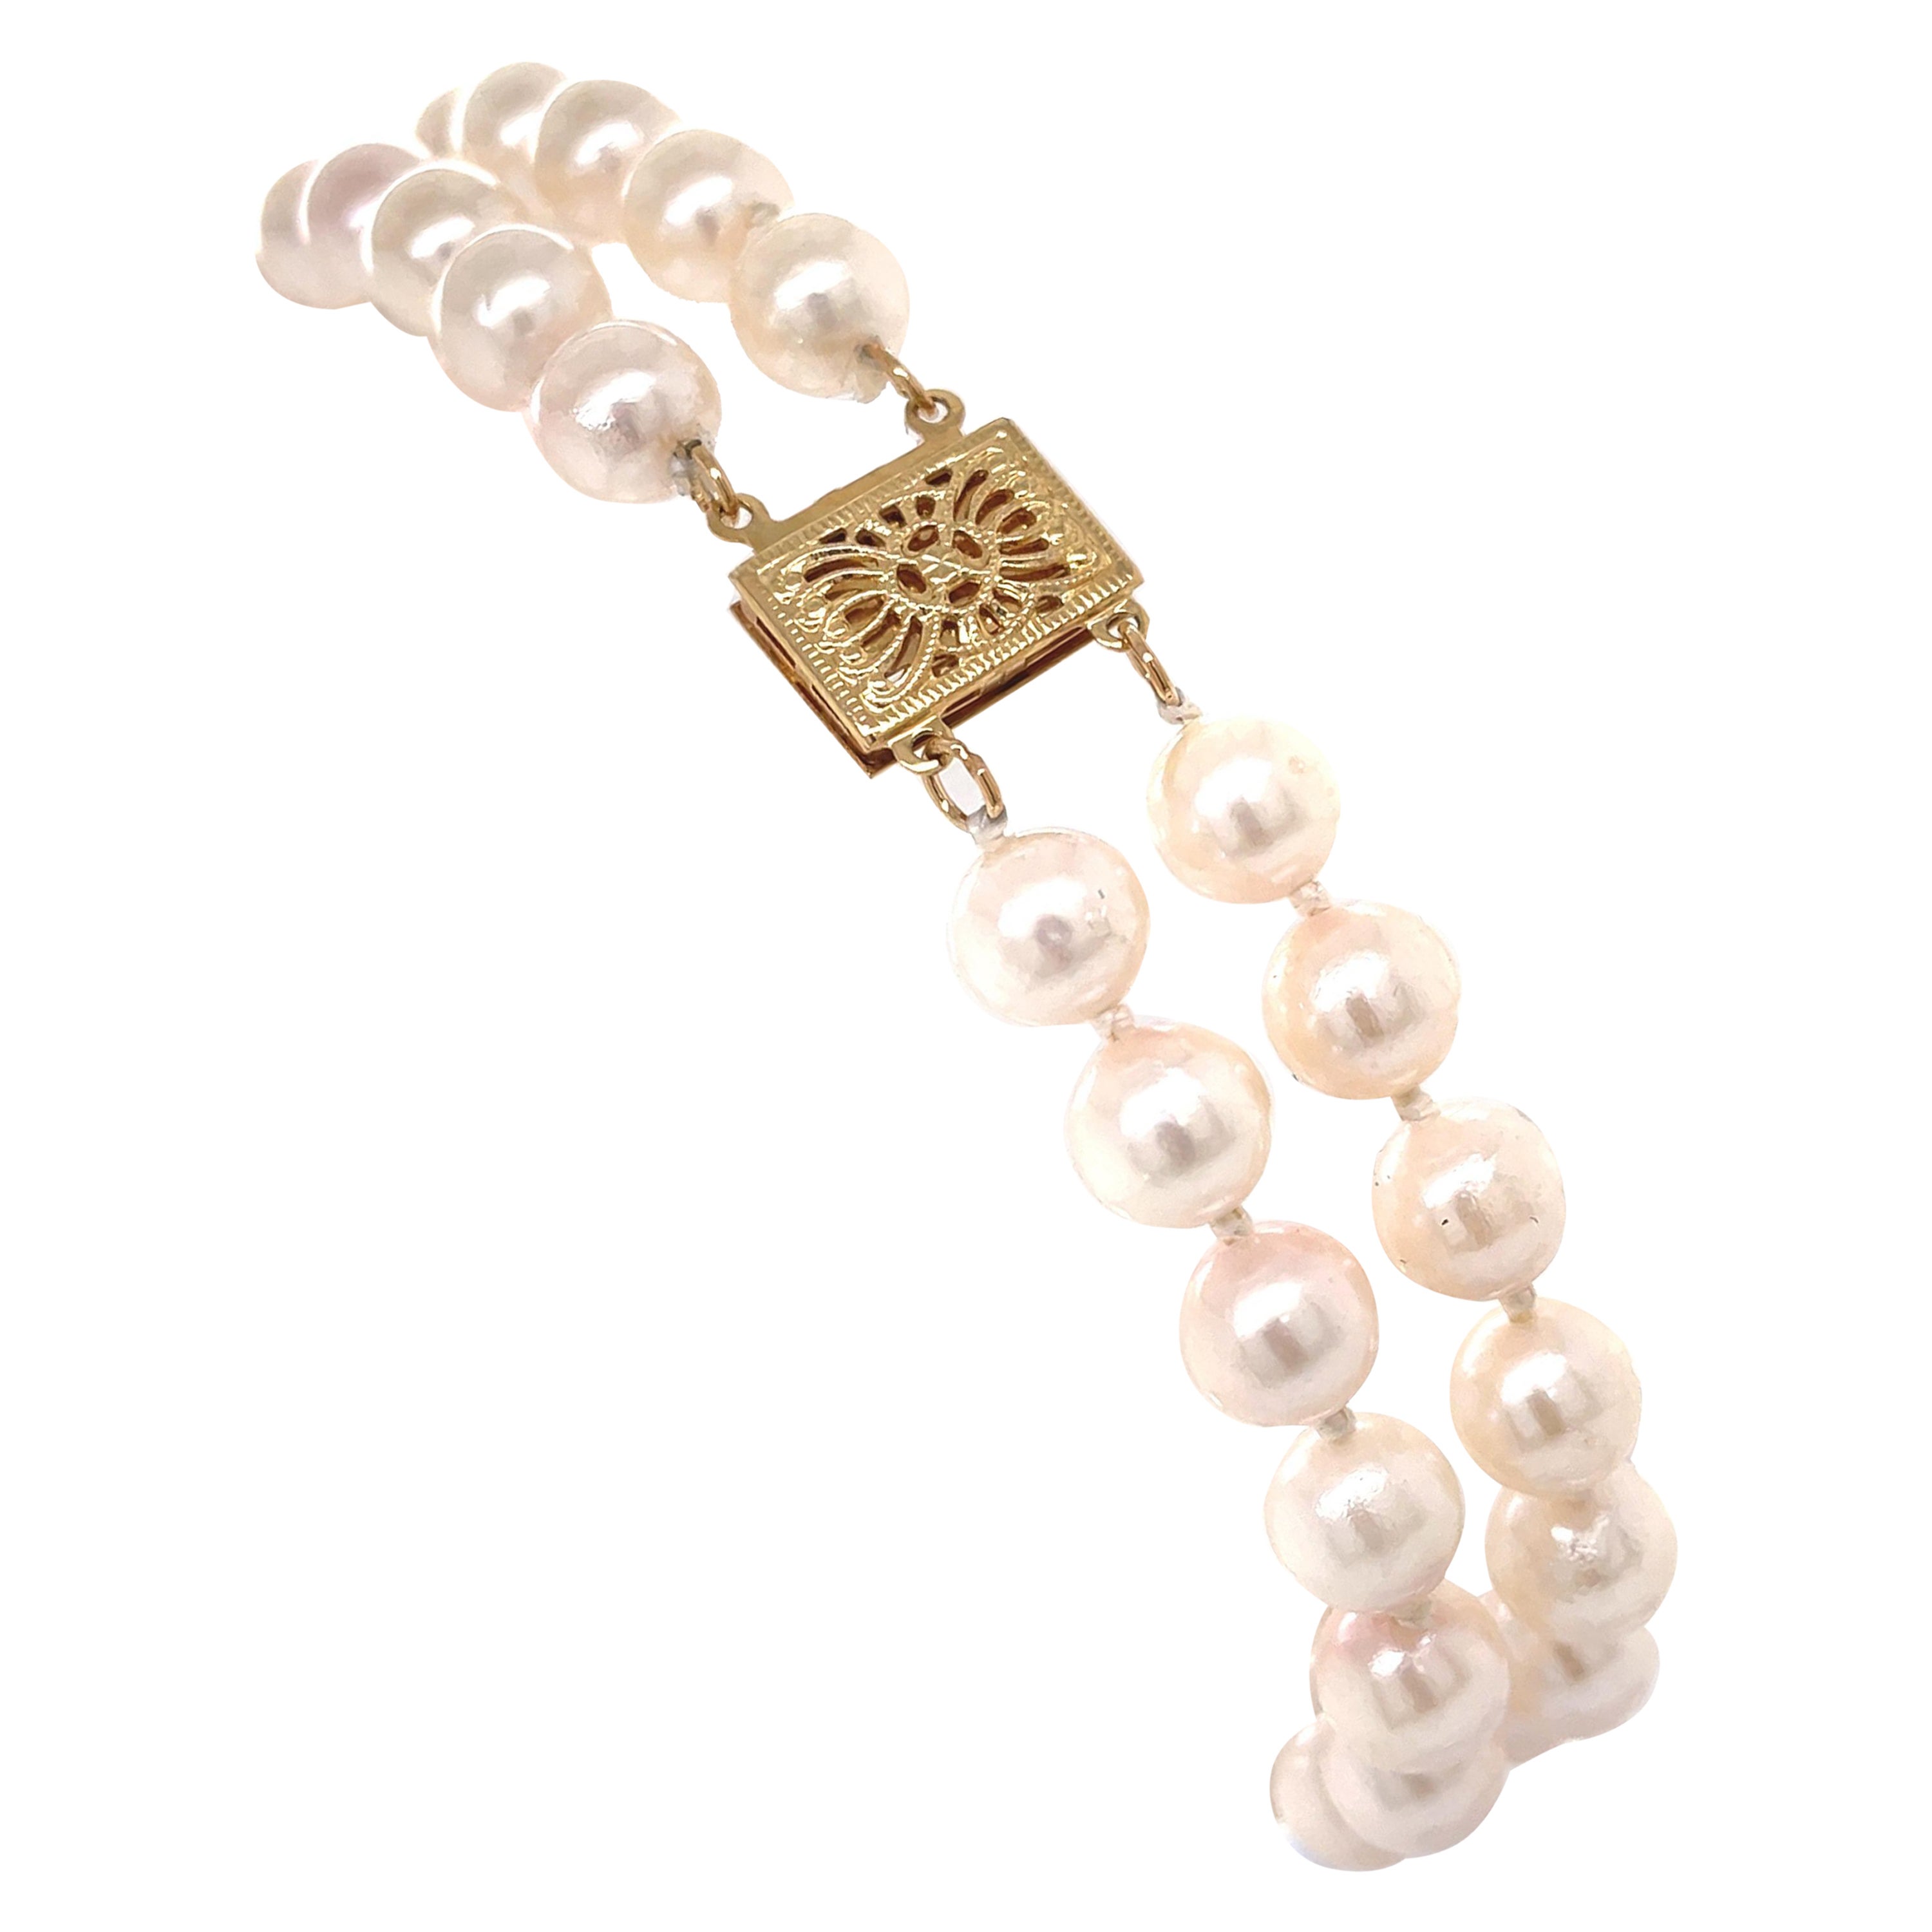 Perlen-Doppelstrang-Armband mit dekorativem filigranem Verschluss aus 14K Gelbgold